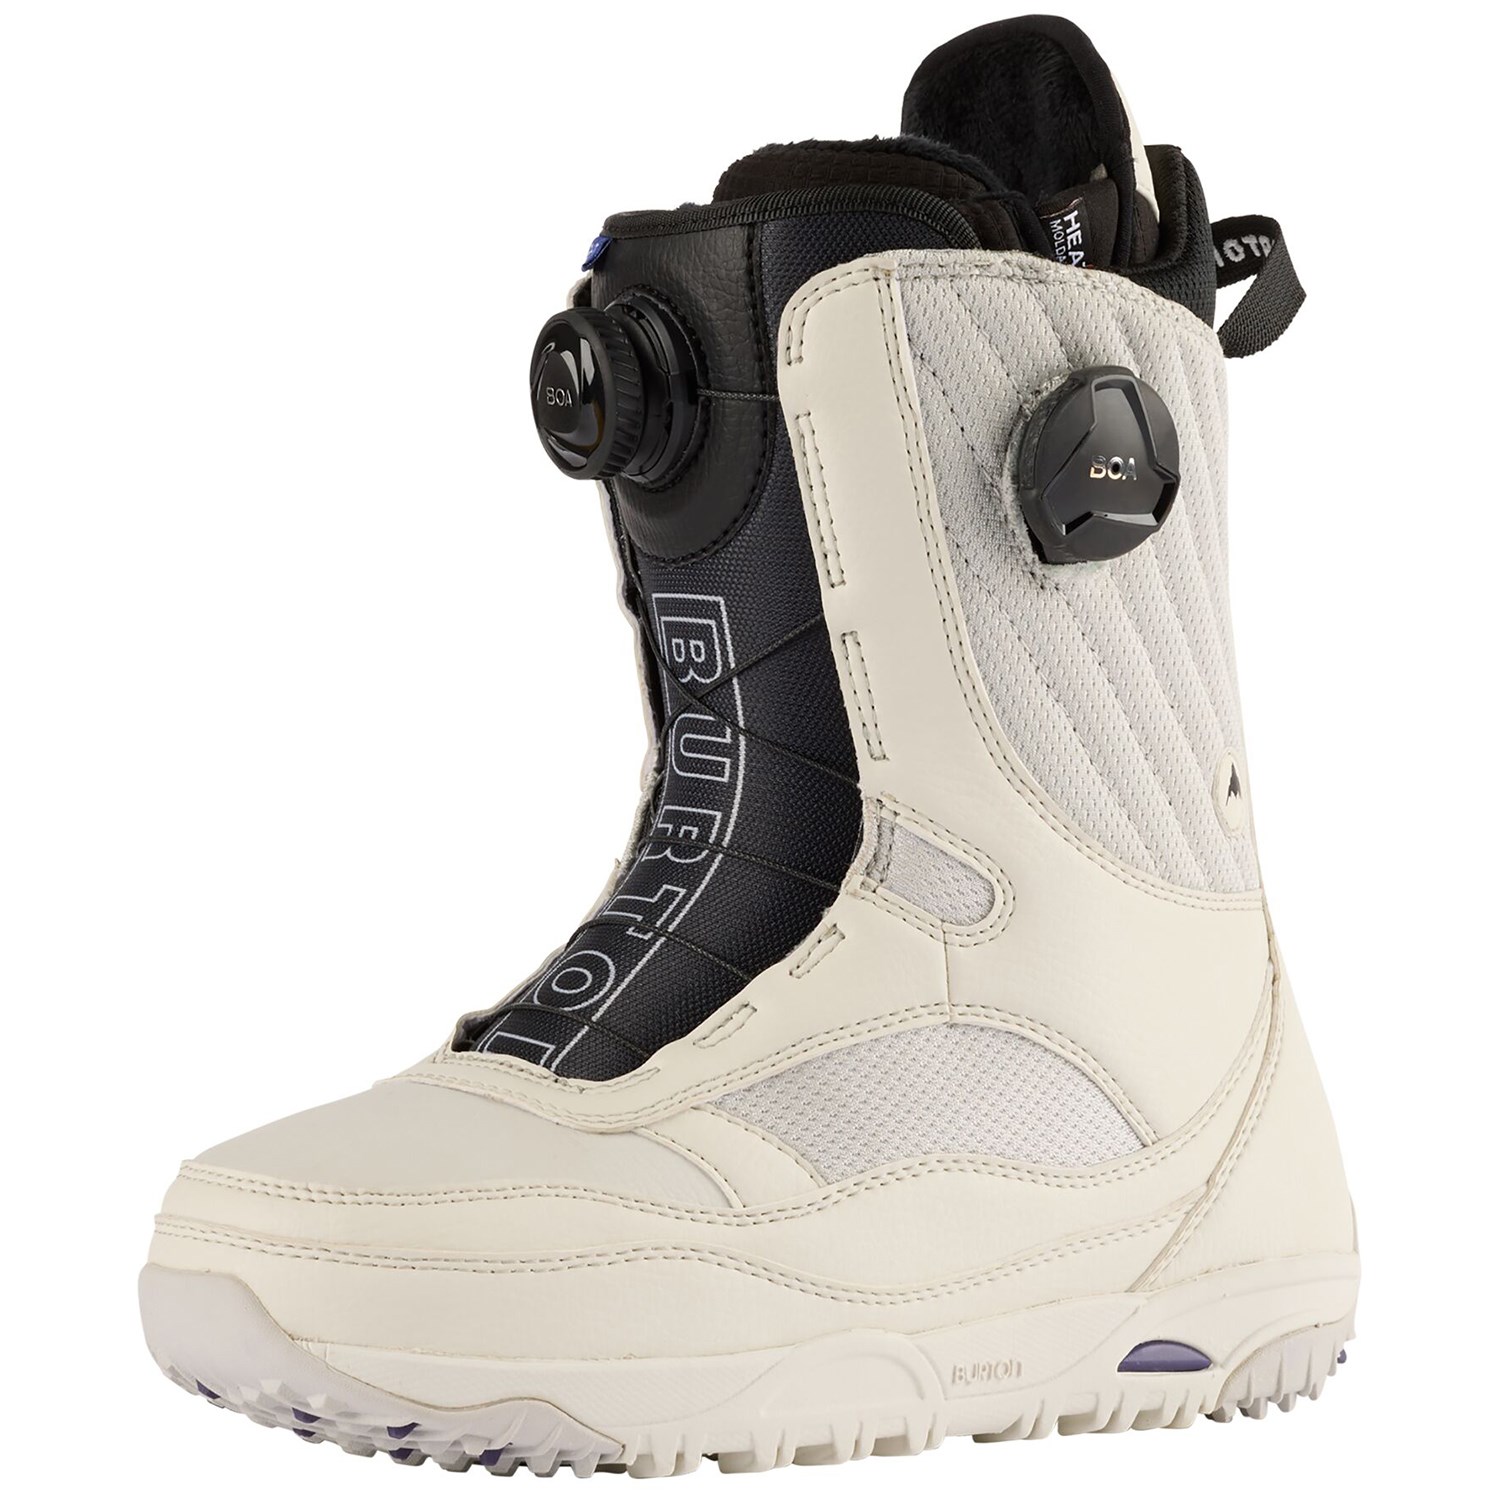 Ботинки для сноубординга Burton Limelight Boa